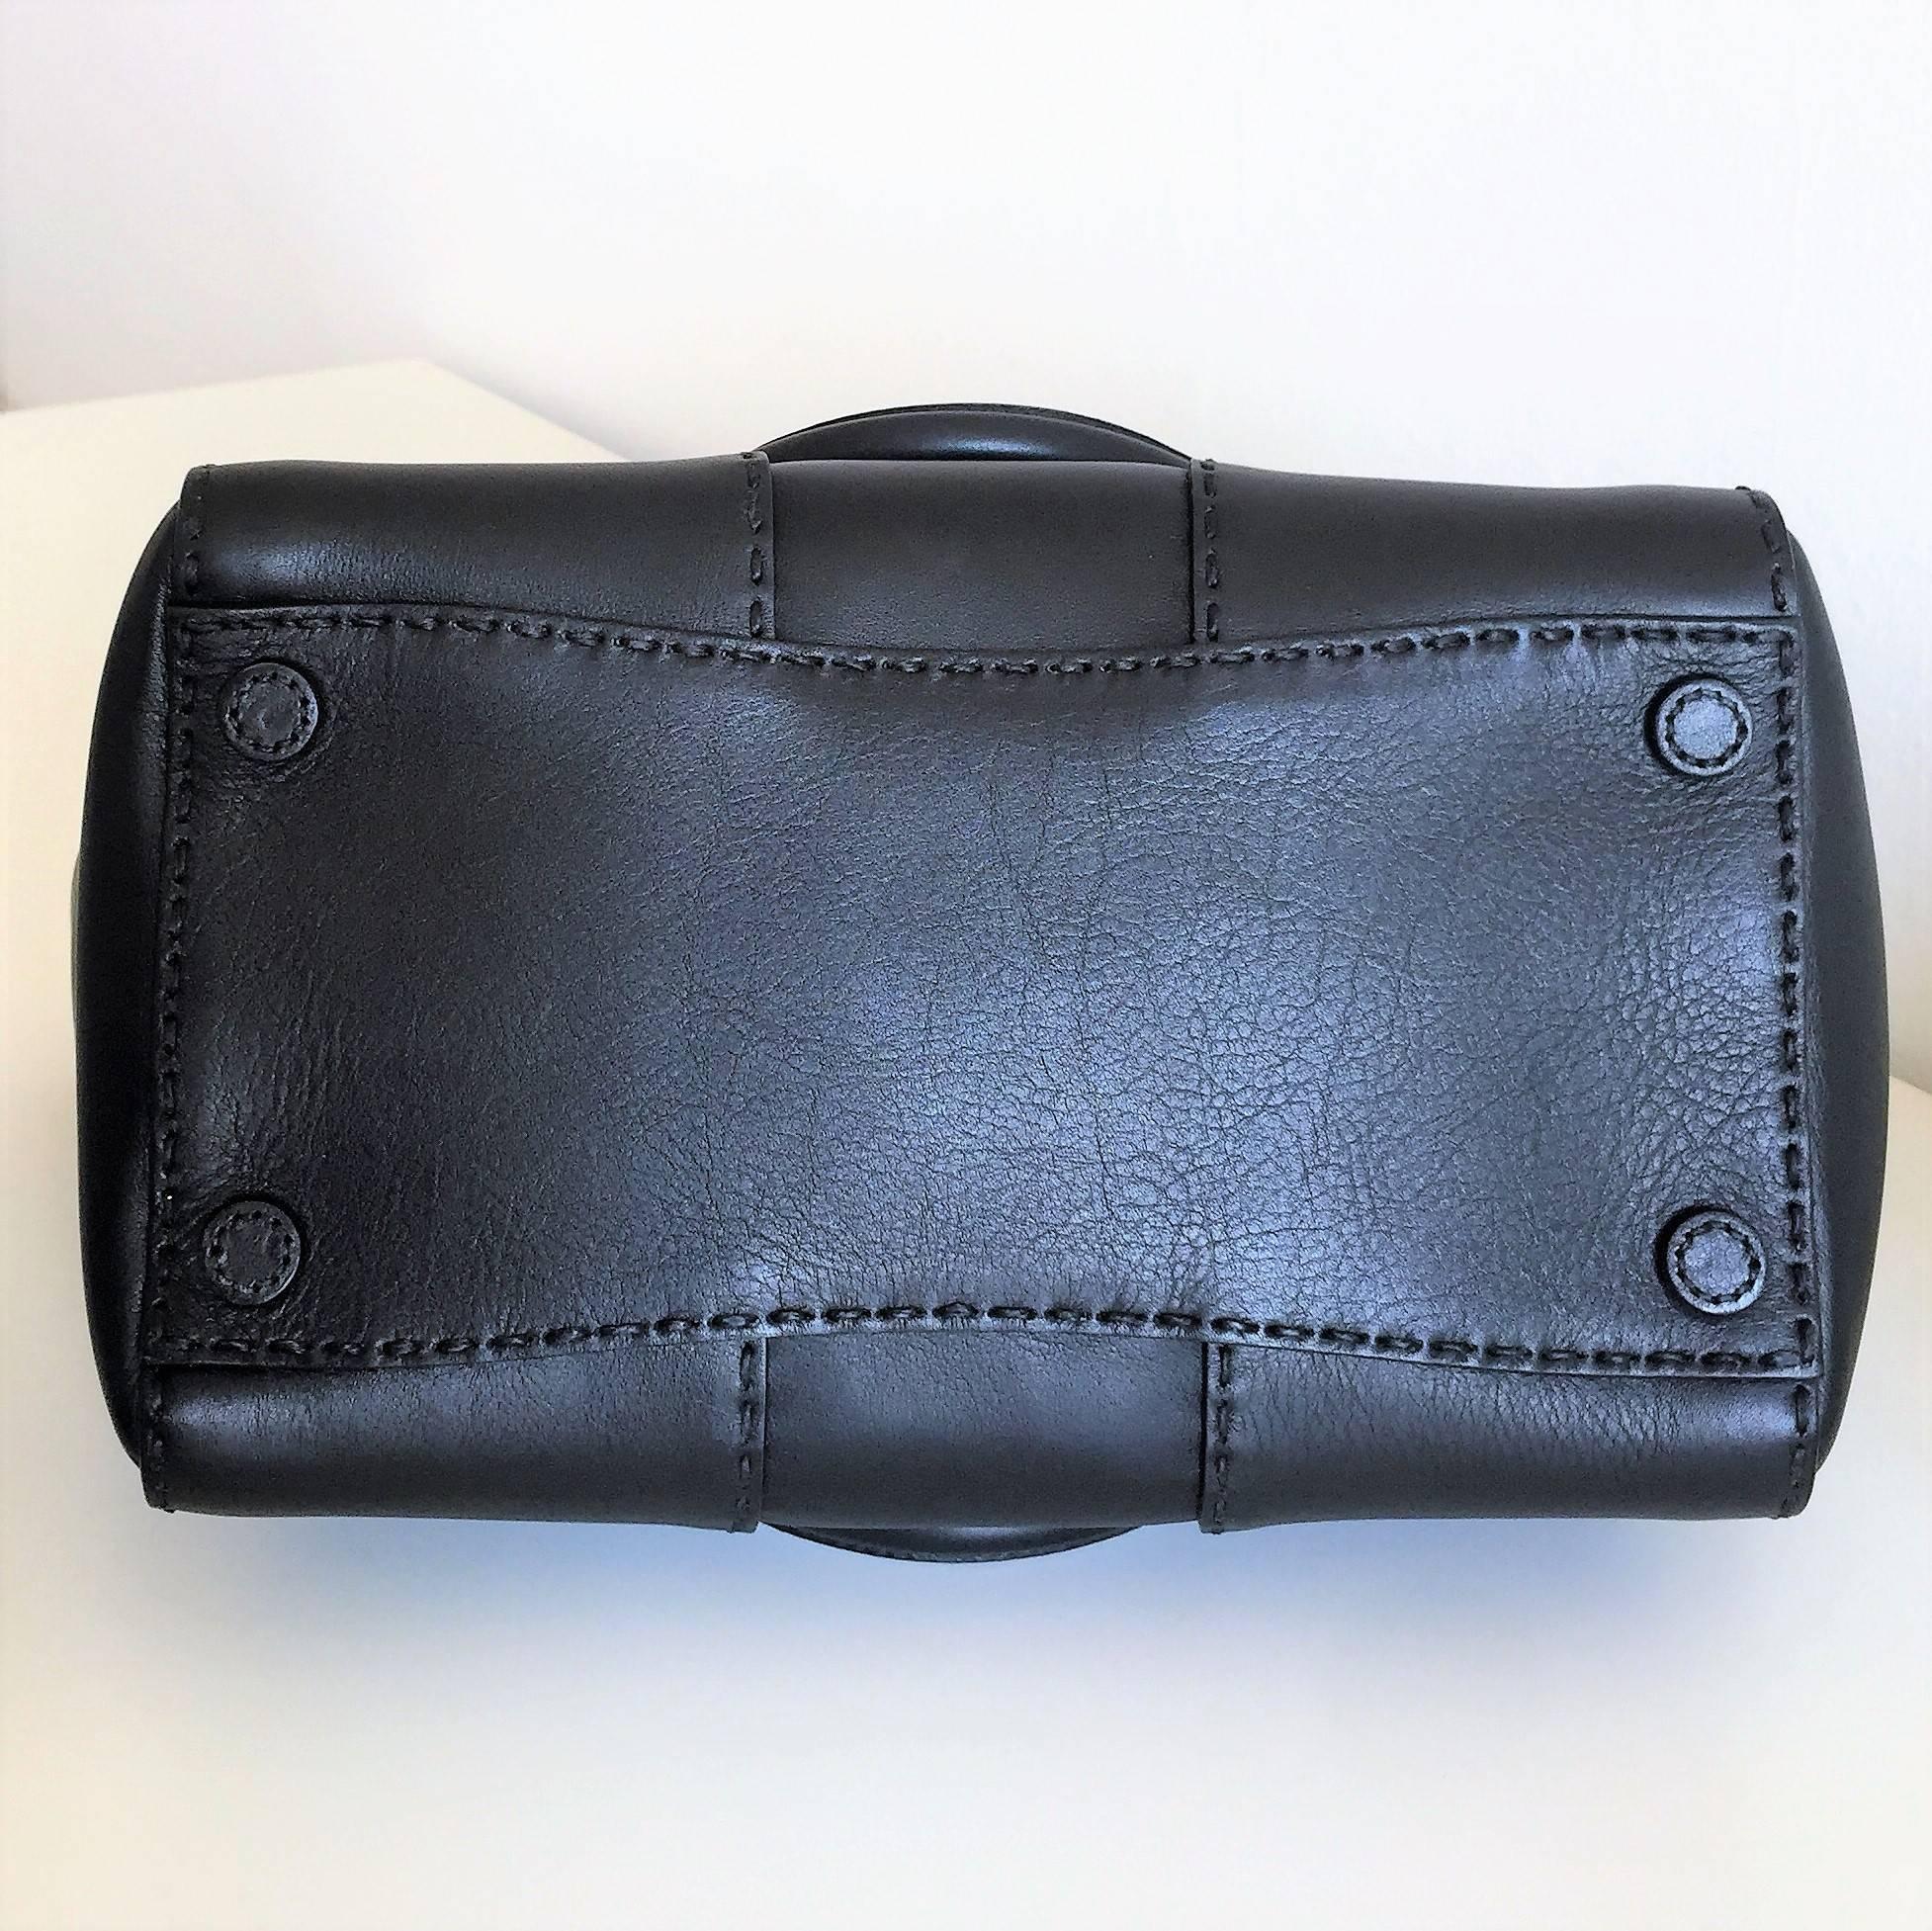 Prada Black Leather Shoulder bag, a Pristine '2way City' Calf Leather Tote For Sale 4